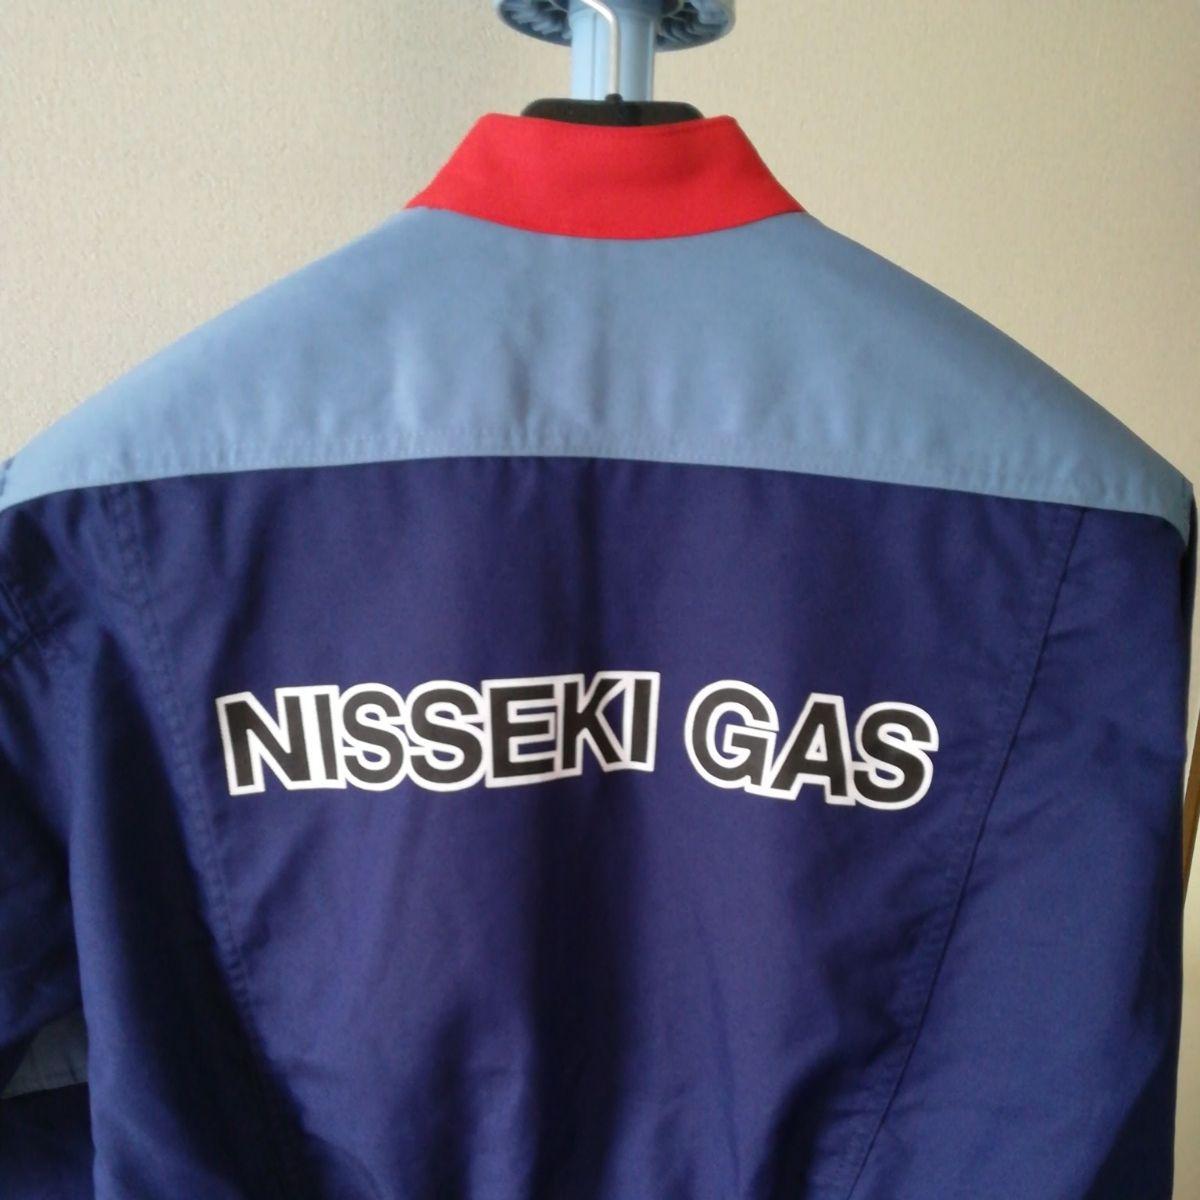 Nisseki Logo - NISSEKI GAS 日石ガスつなぎMサイズ未使用品NISSEKI GAS 日石ガスつなぎM ...